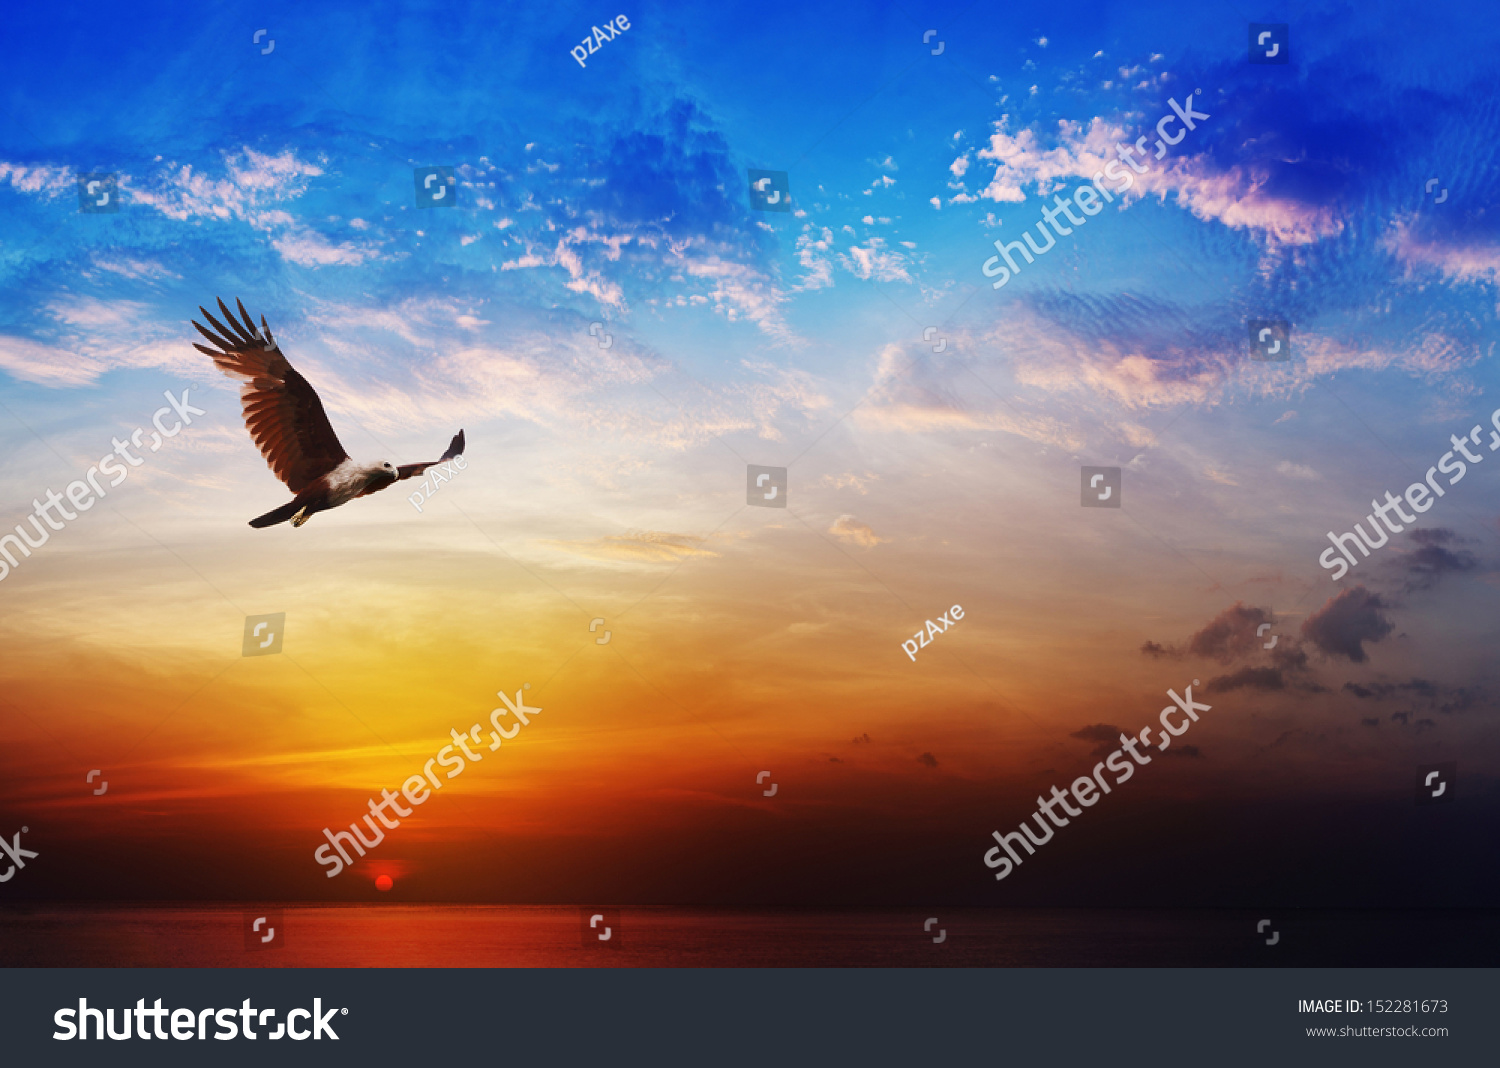 Flying eagle on beautiful sunset sky background - Bird of prey - Brahminy Kite #152281673